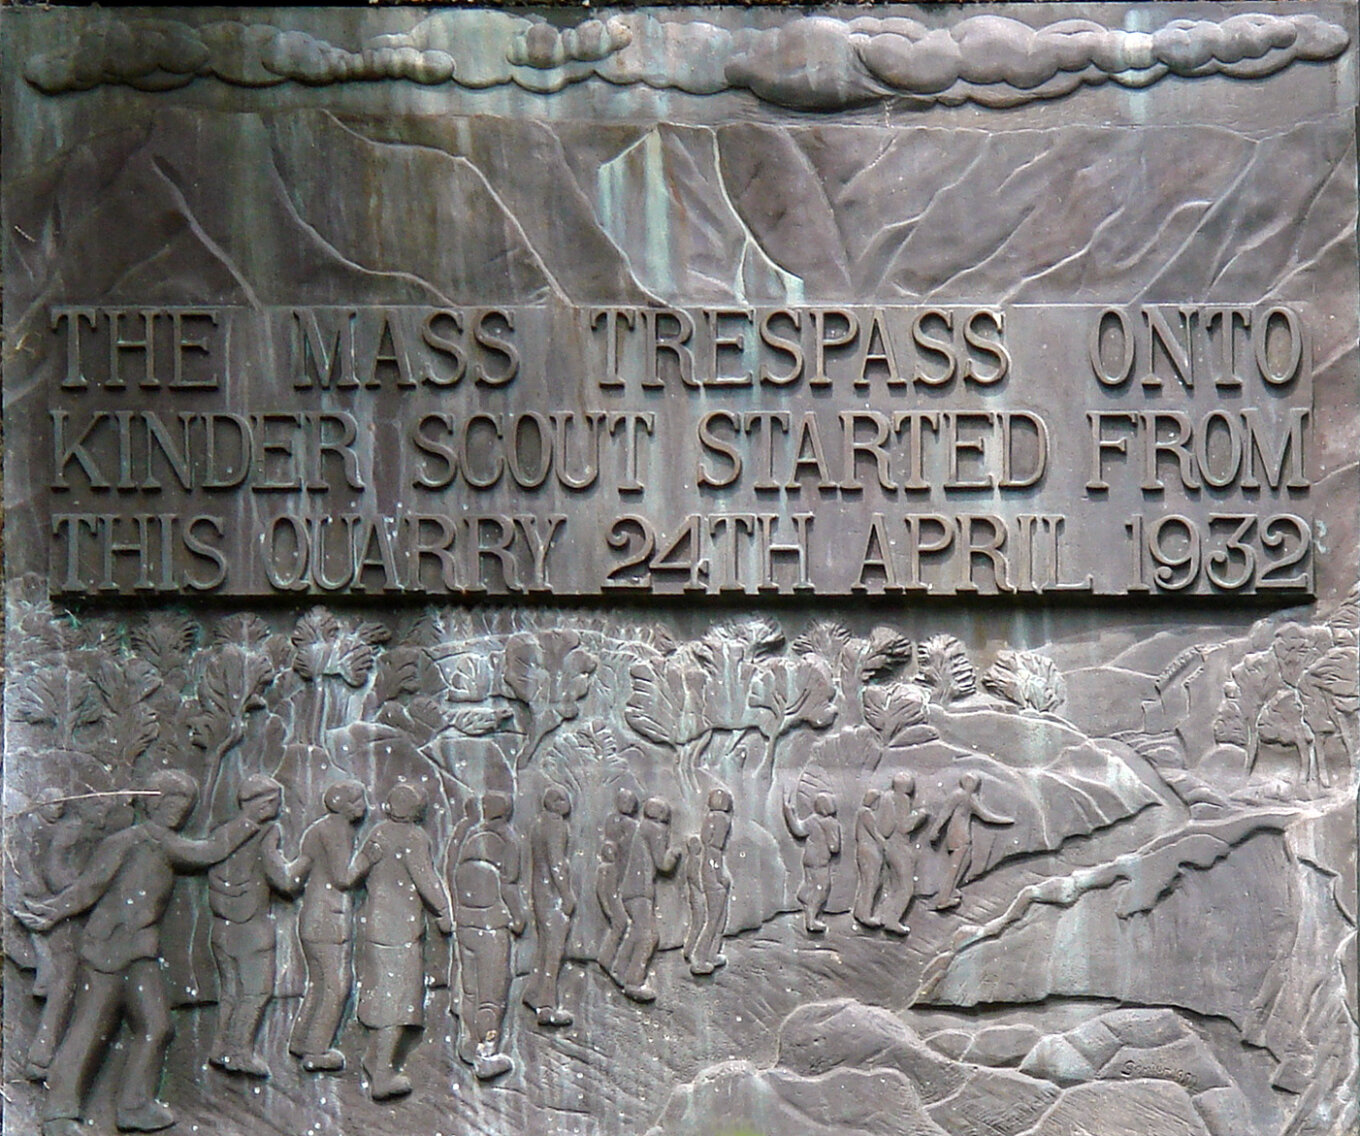 Commemorative plaque of mass trespass of Kinder Scout at Bowden Bridge Quarry, Hayfield